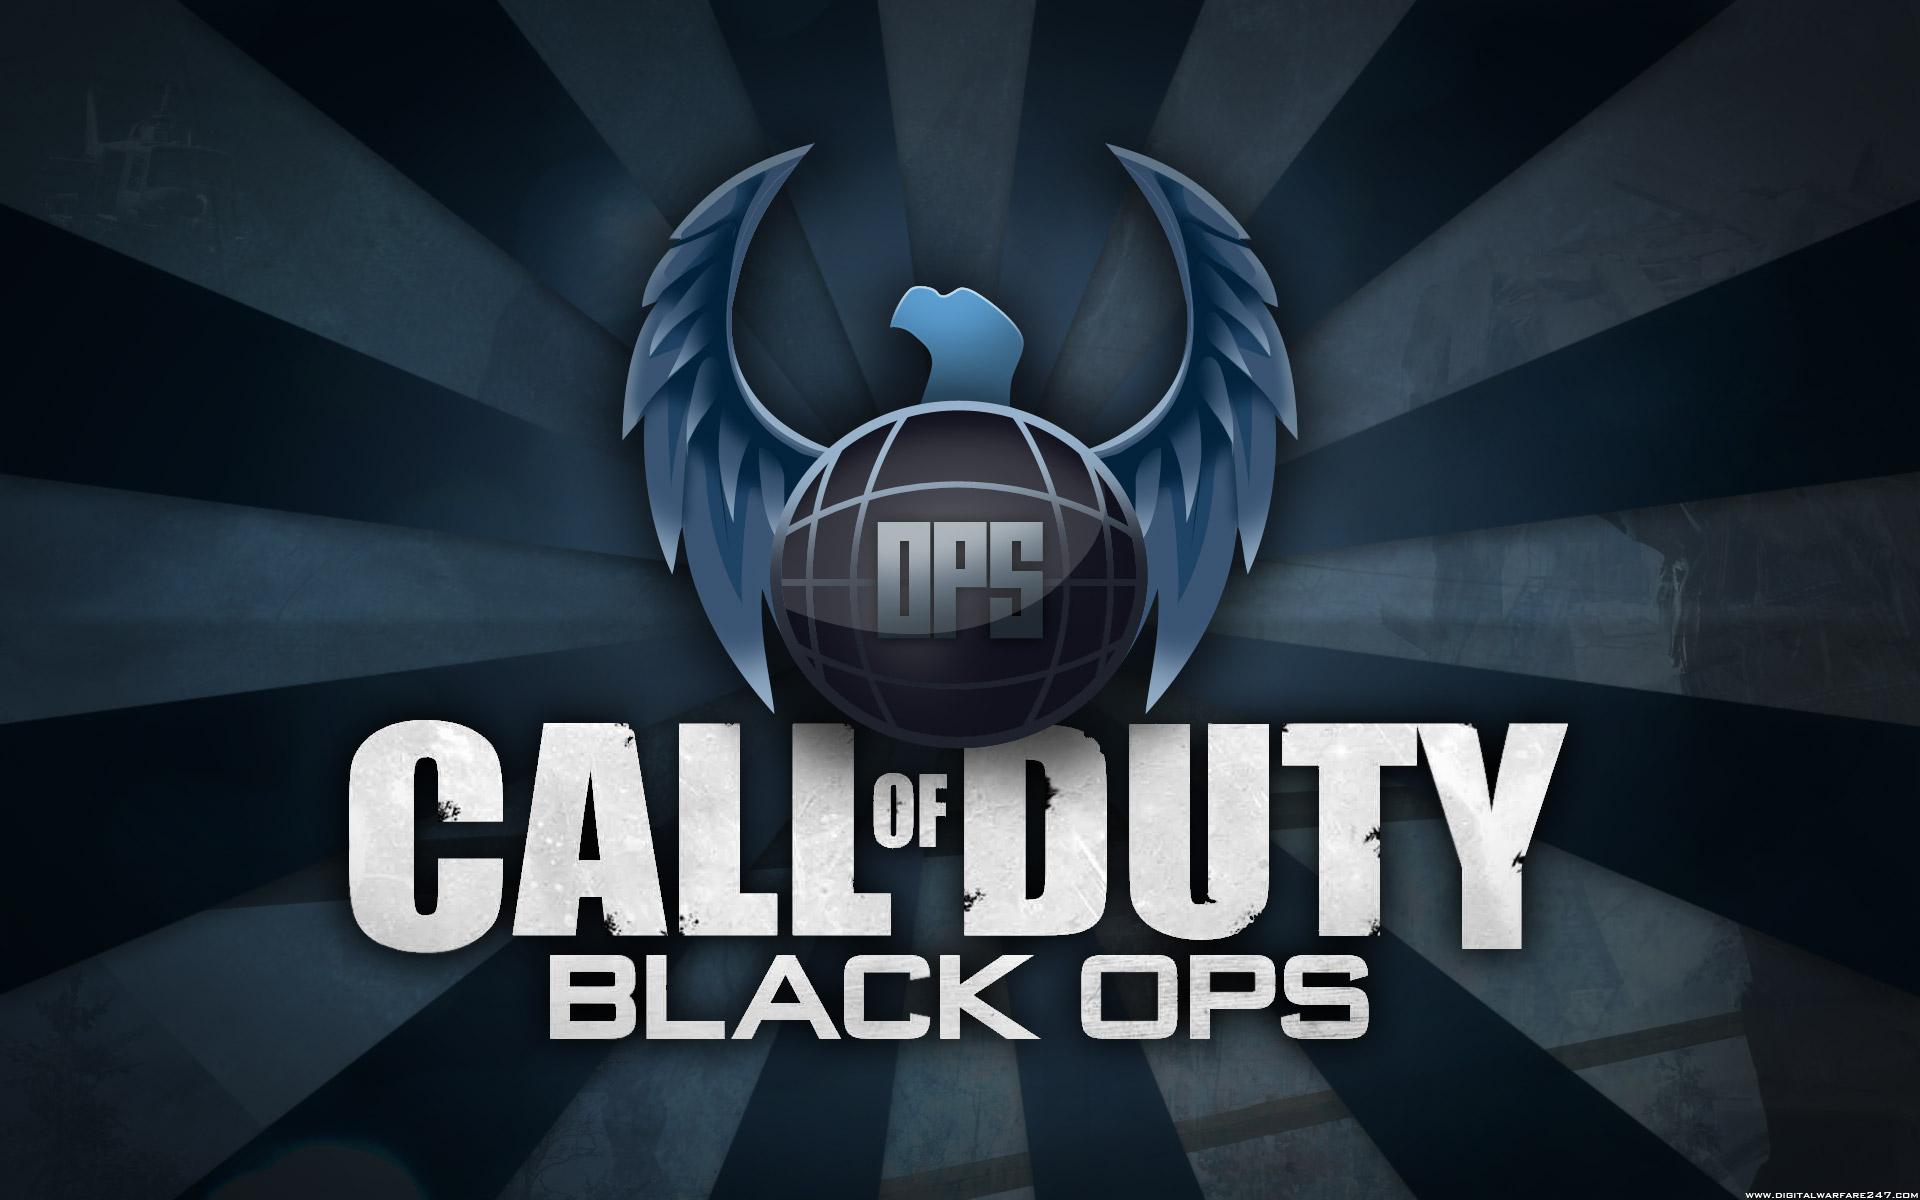 cod black ops logo